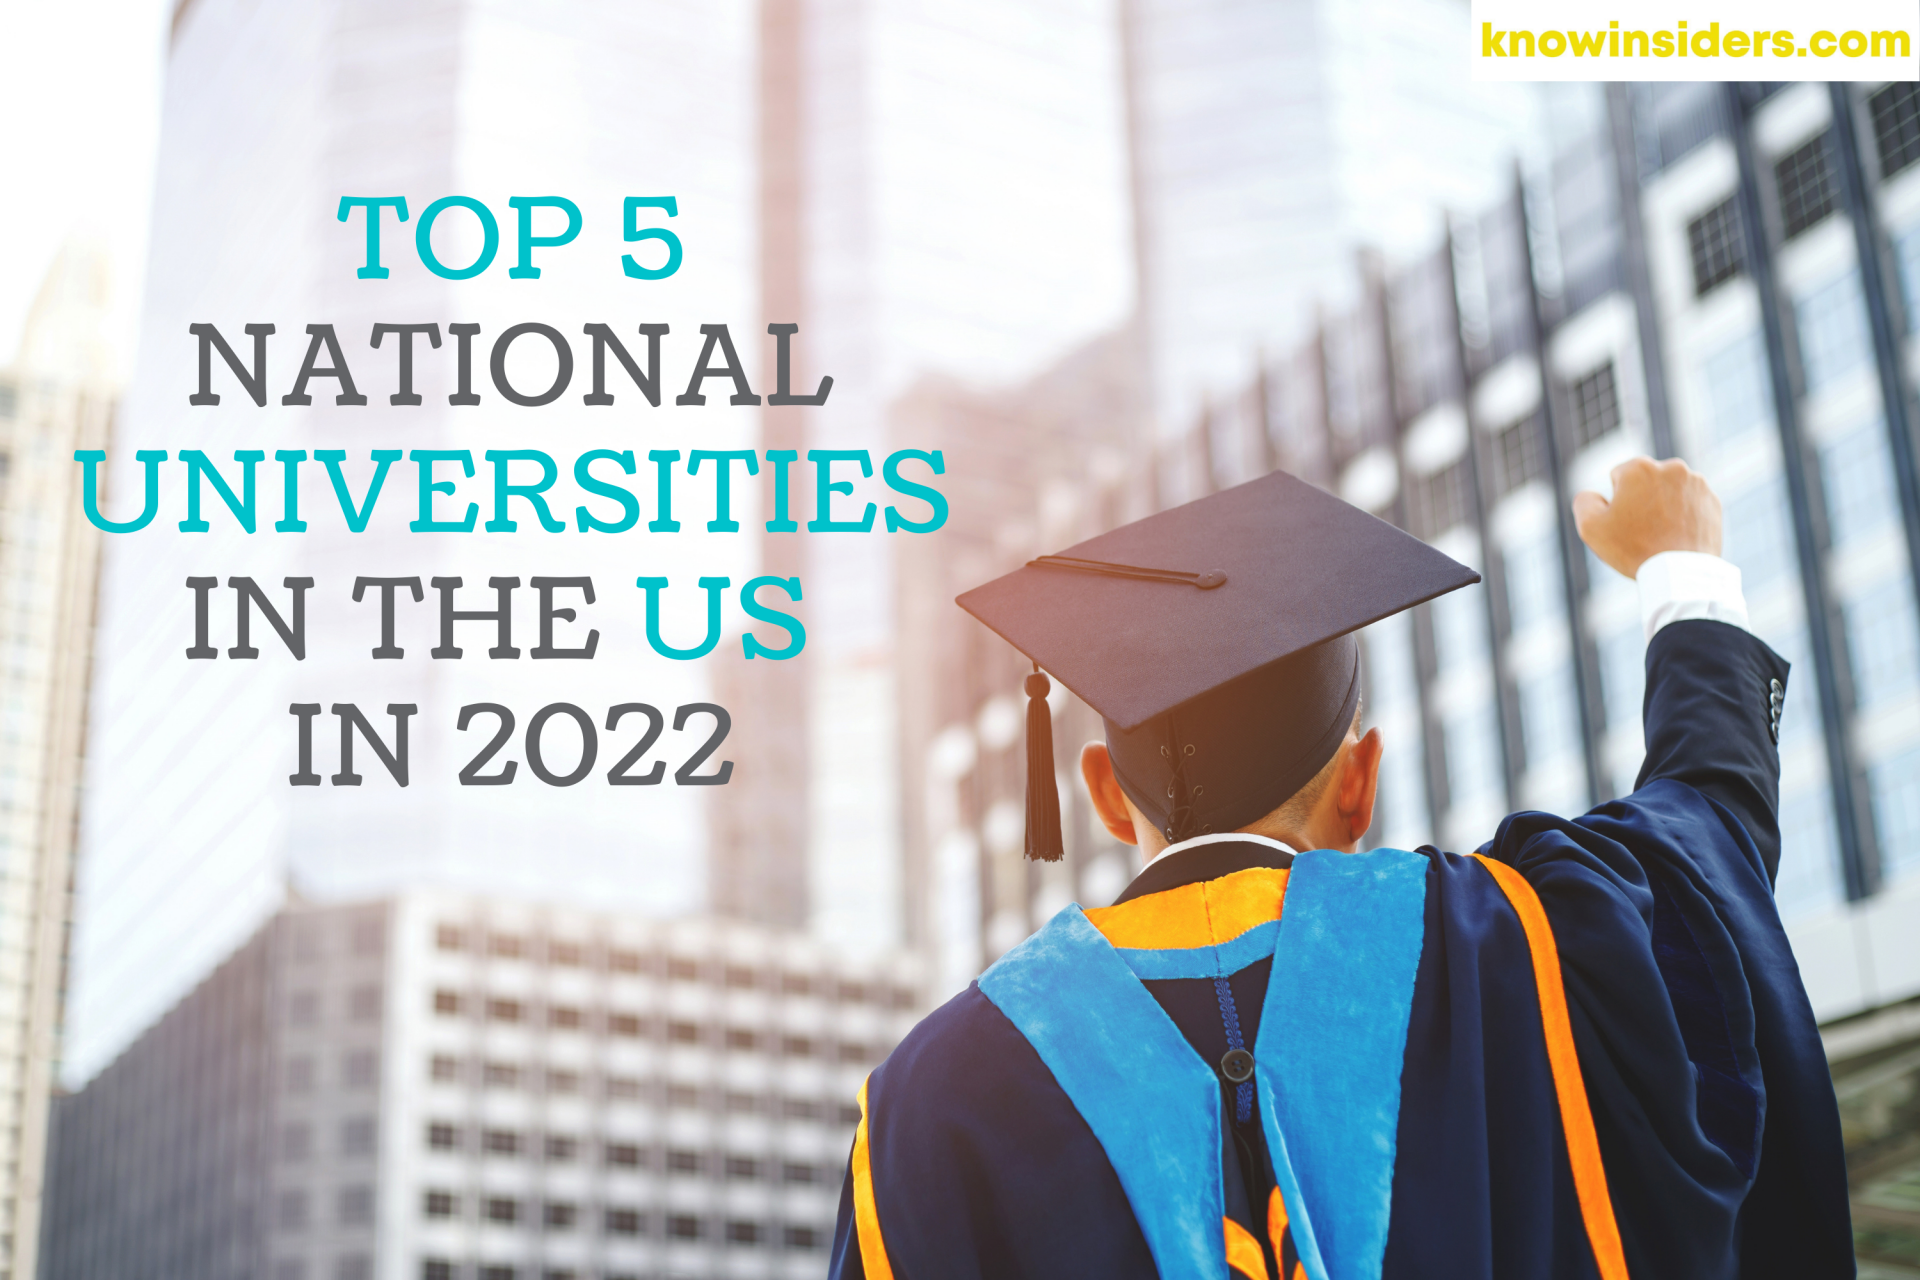 Top 5 Most Prestigious National Universities In The U.S